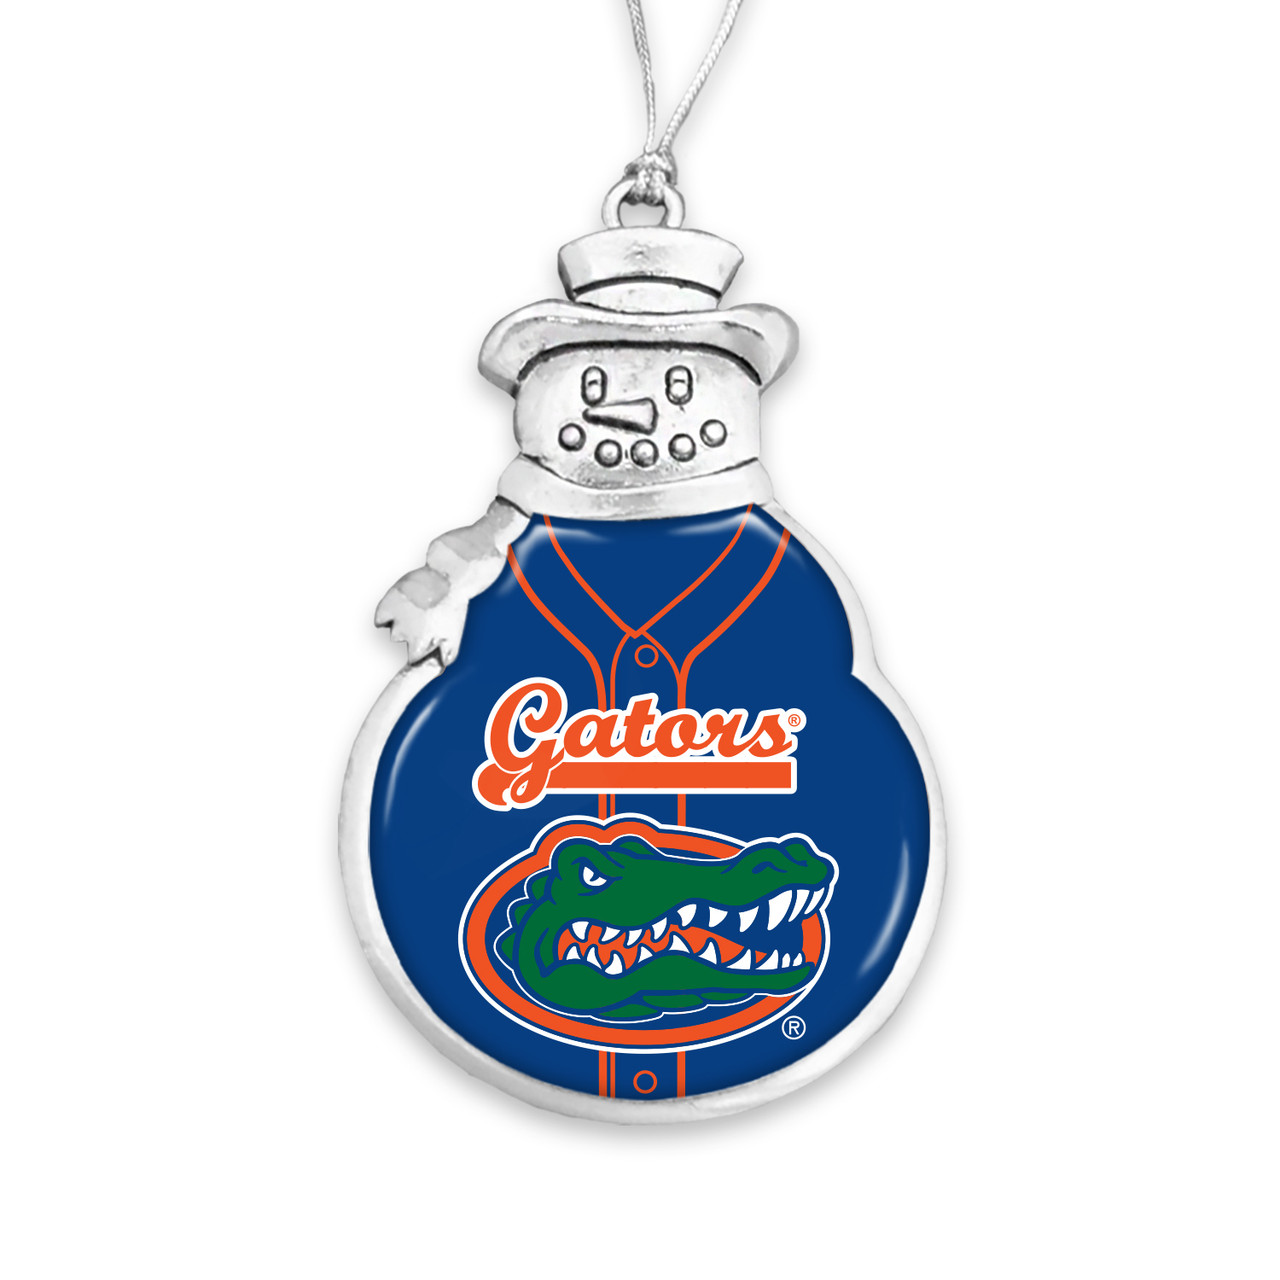 Florida Gators Snowman Ornament with Baseball Jersey